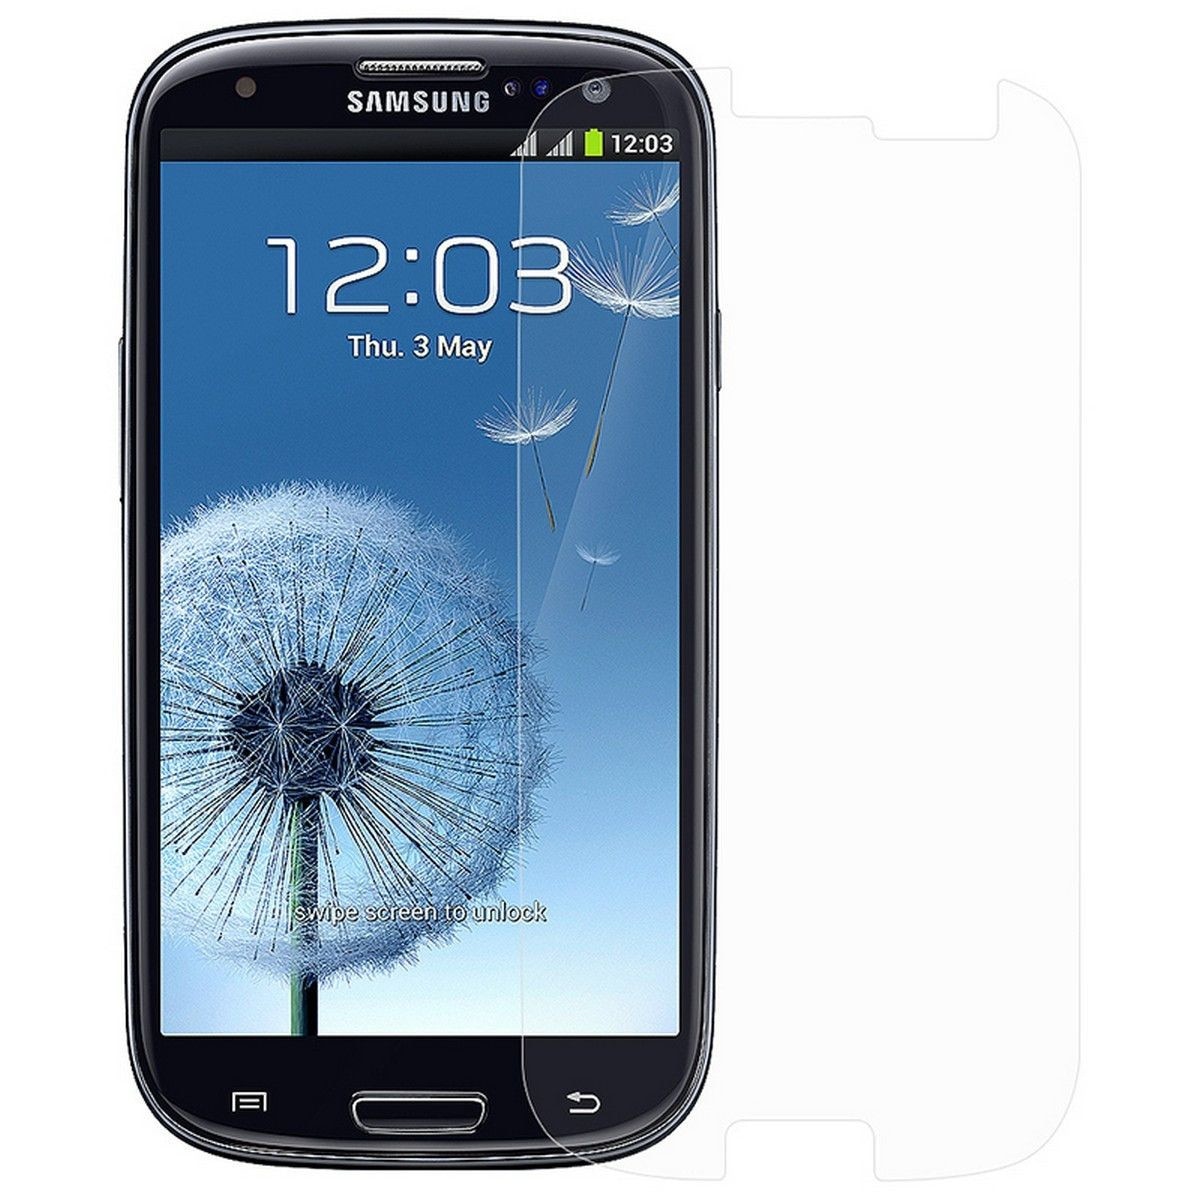 digest Owl Kilauea Mountain Folie Sticla Samsung Galaxy S3 Neo I9301/S3 I9 - eMAG.ro